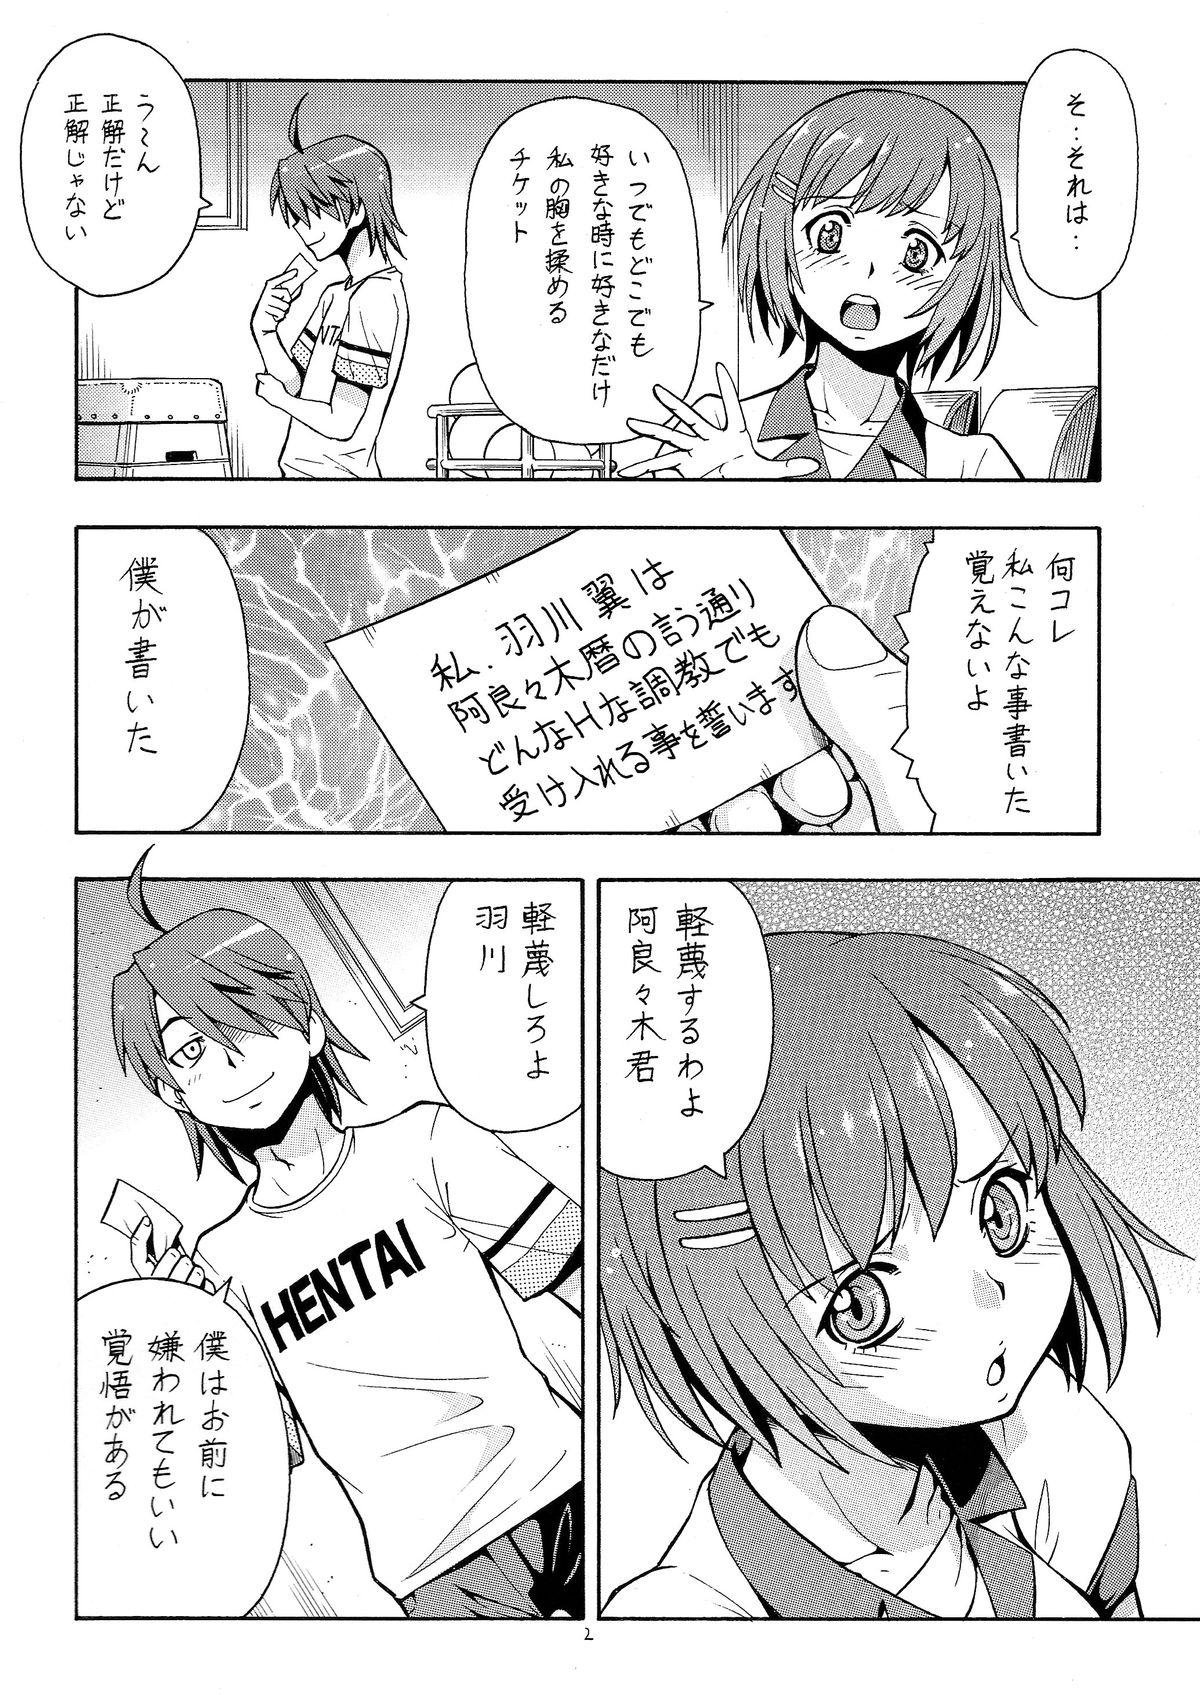 Nylons Hito ni Hakanai to Kaite "Araragi" to Yomu 7 - Bakemonogatari Freak - Page 4